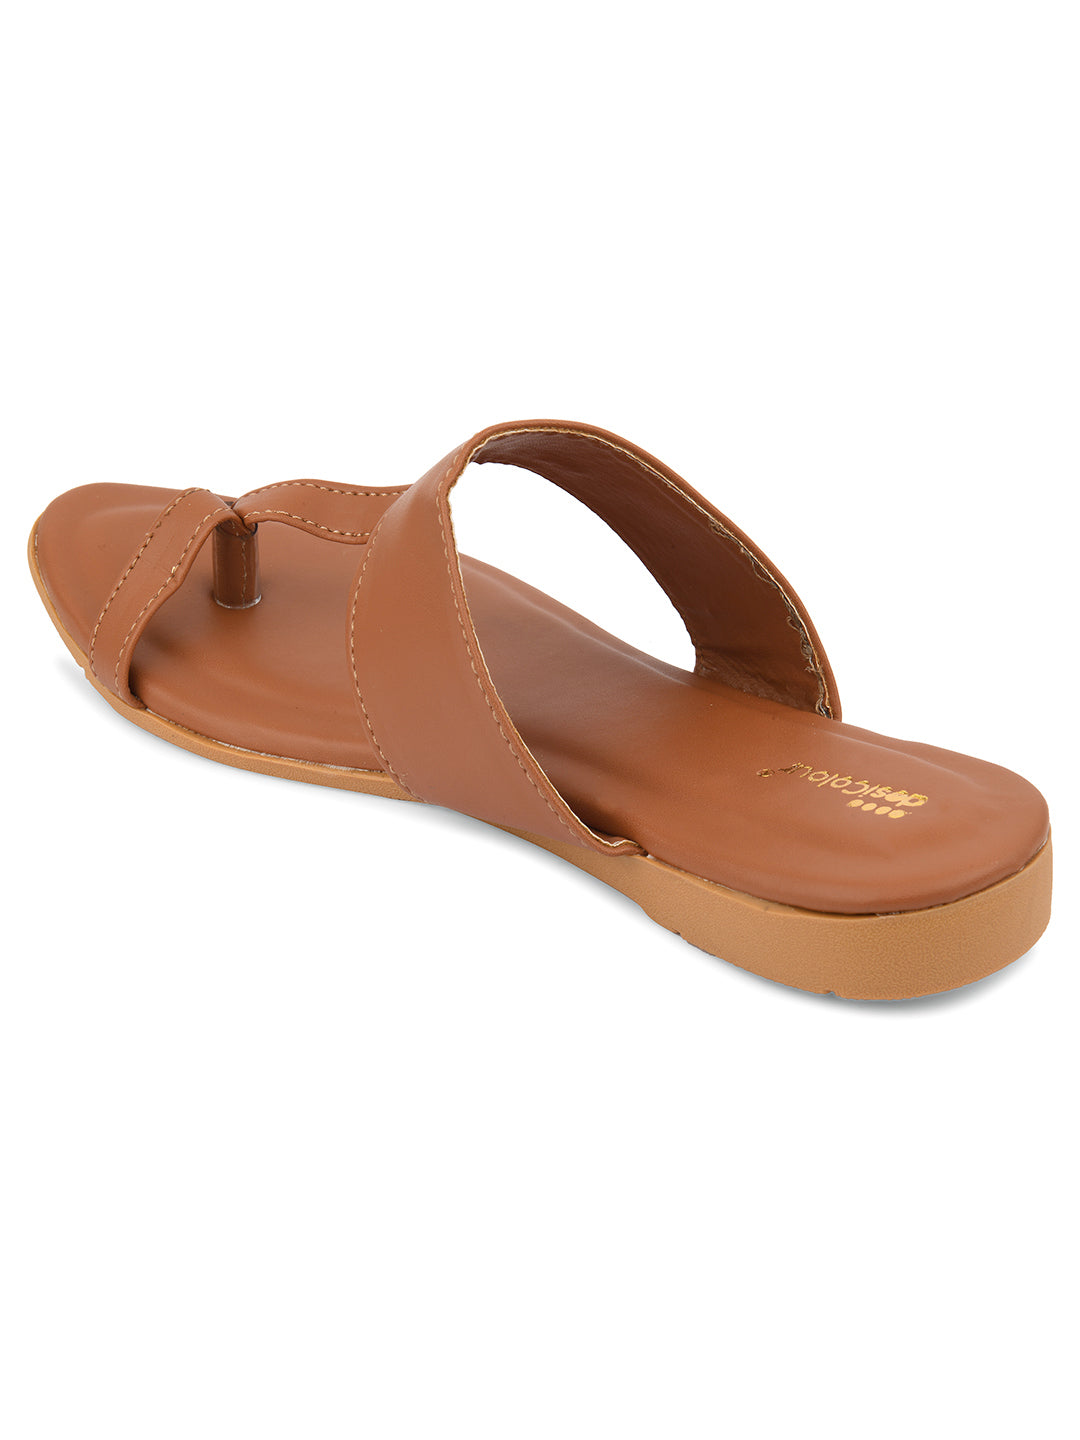 Women's Brown  Indian Ethnic Comfort Slipper Footwear - Desi Colour